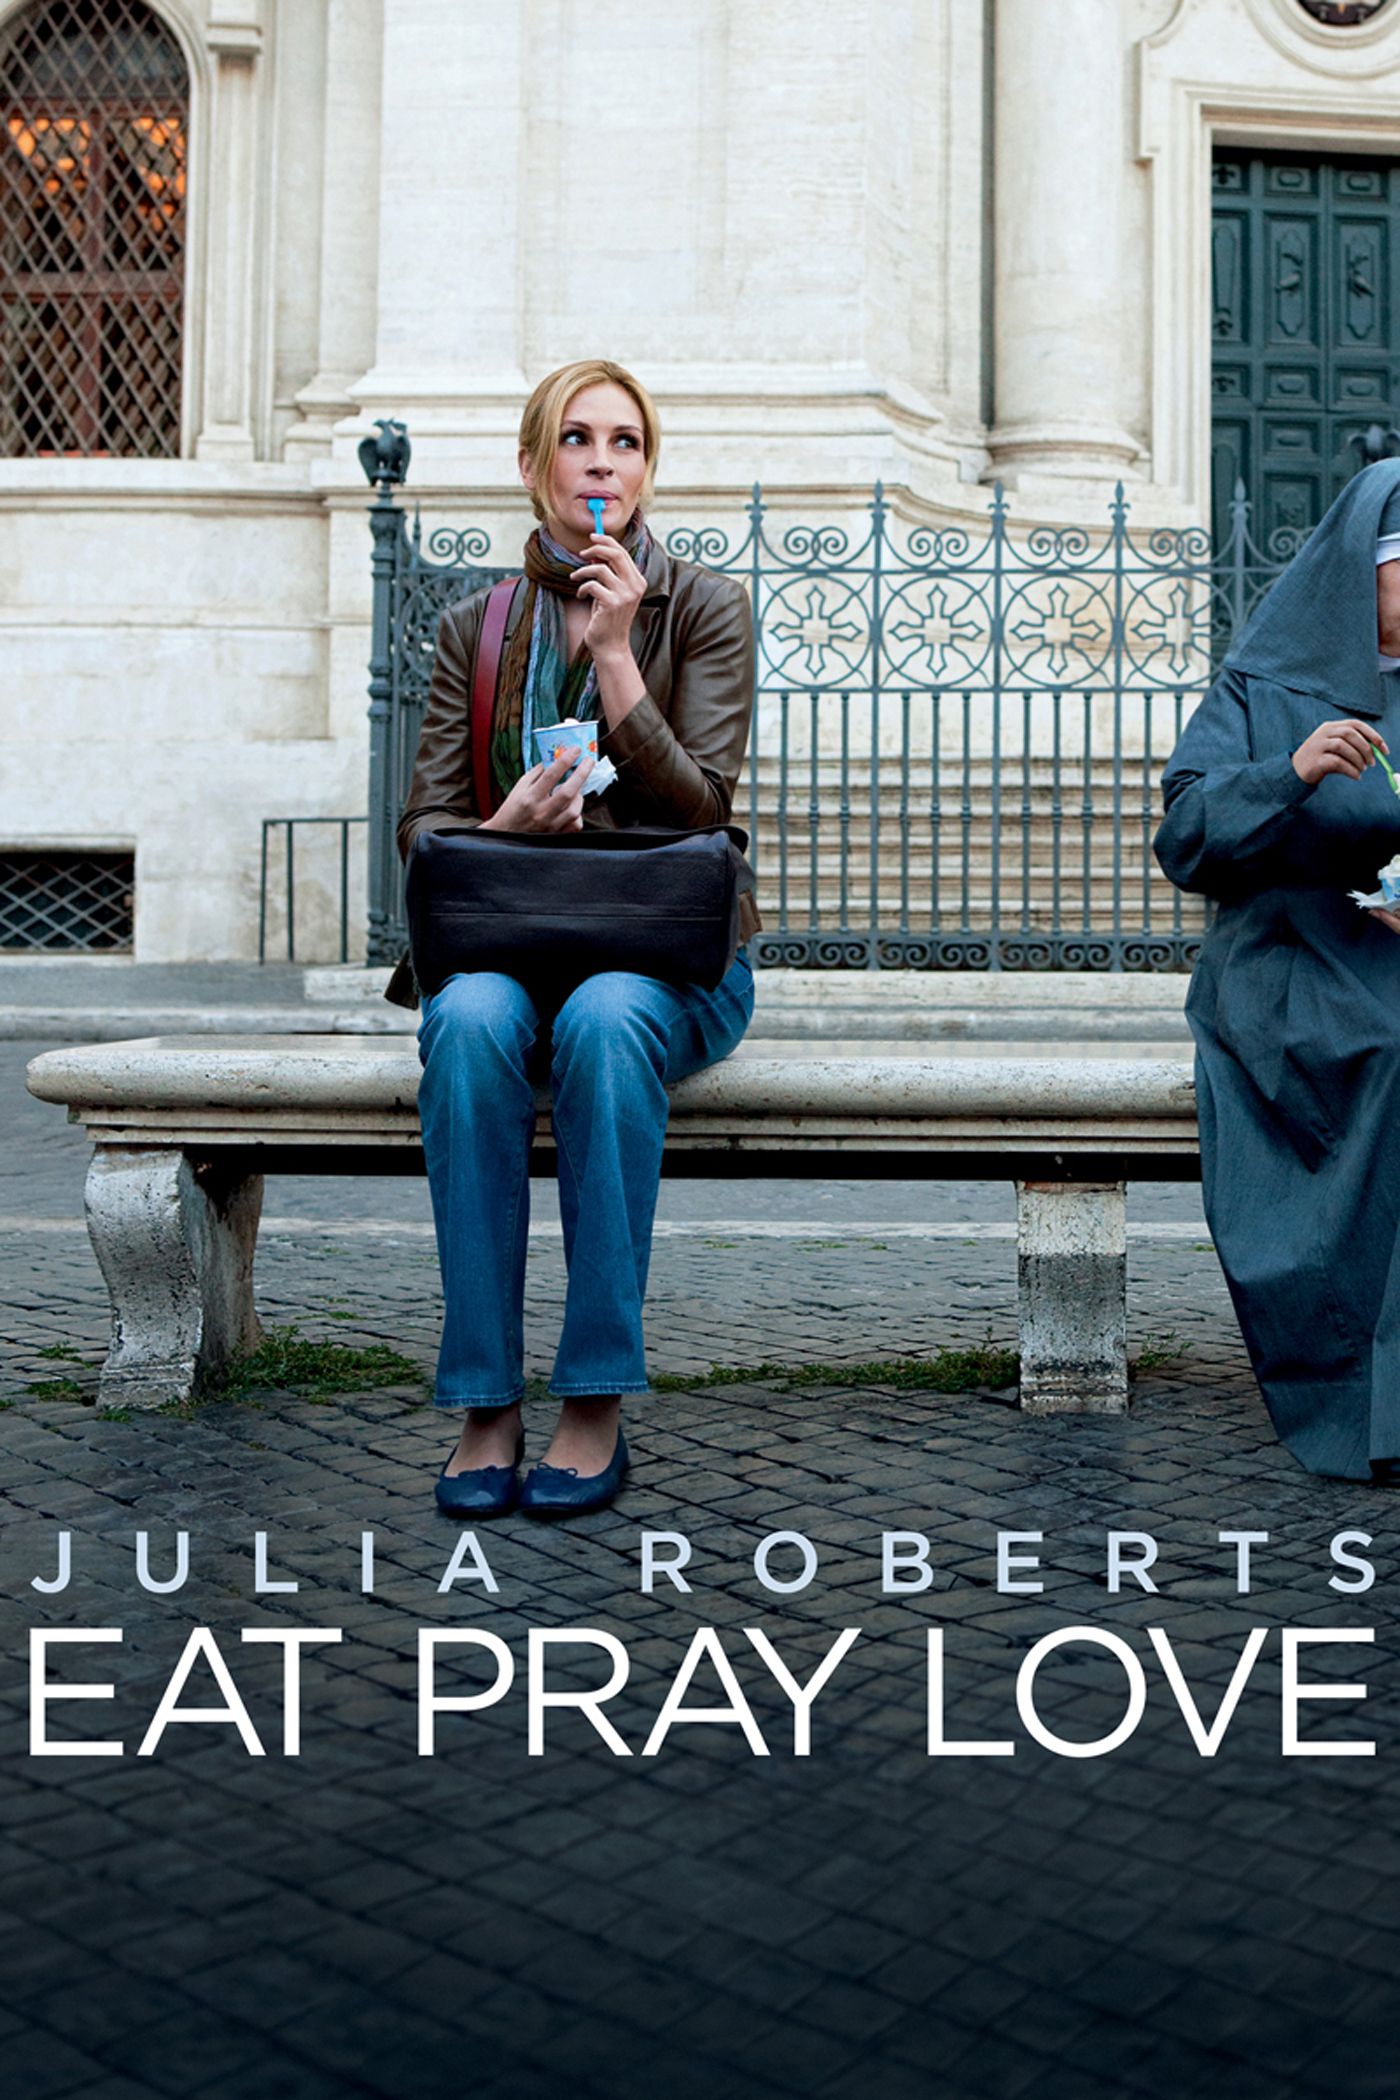 eat pray love full movie download